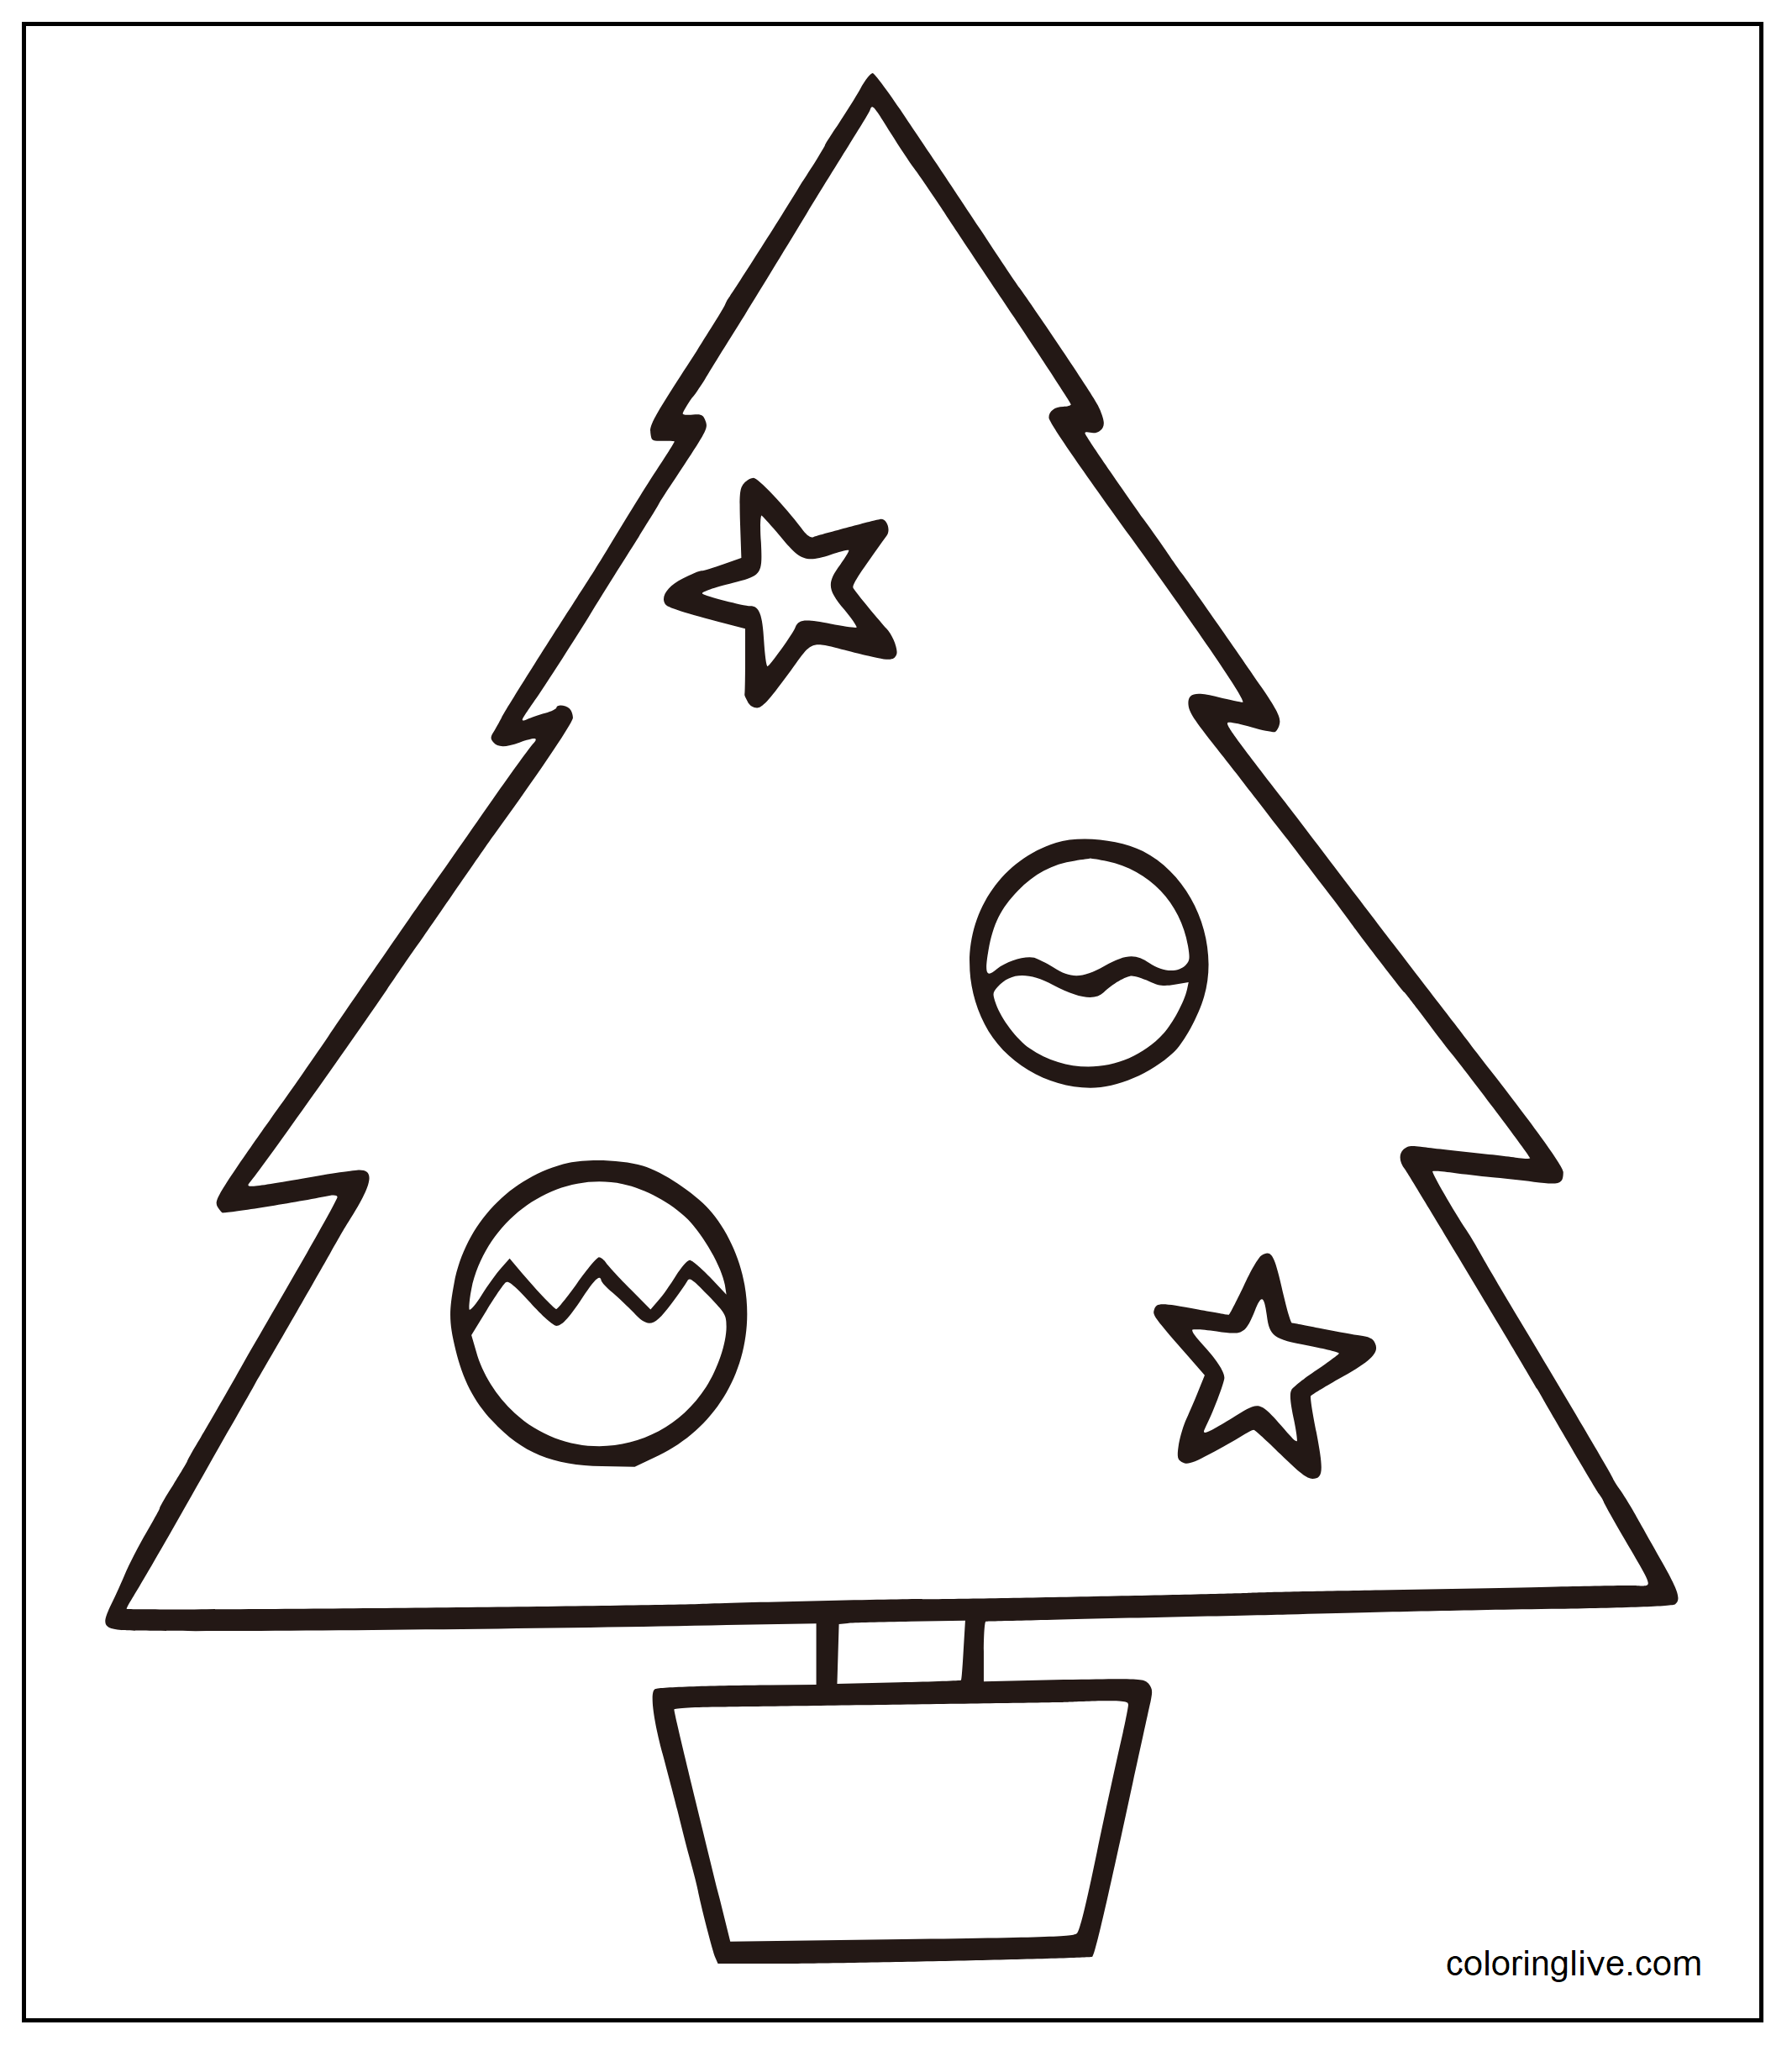 Printable Christmas tree blank for Coloring Page for kids.